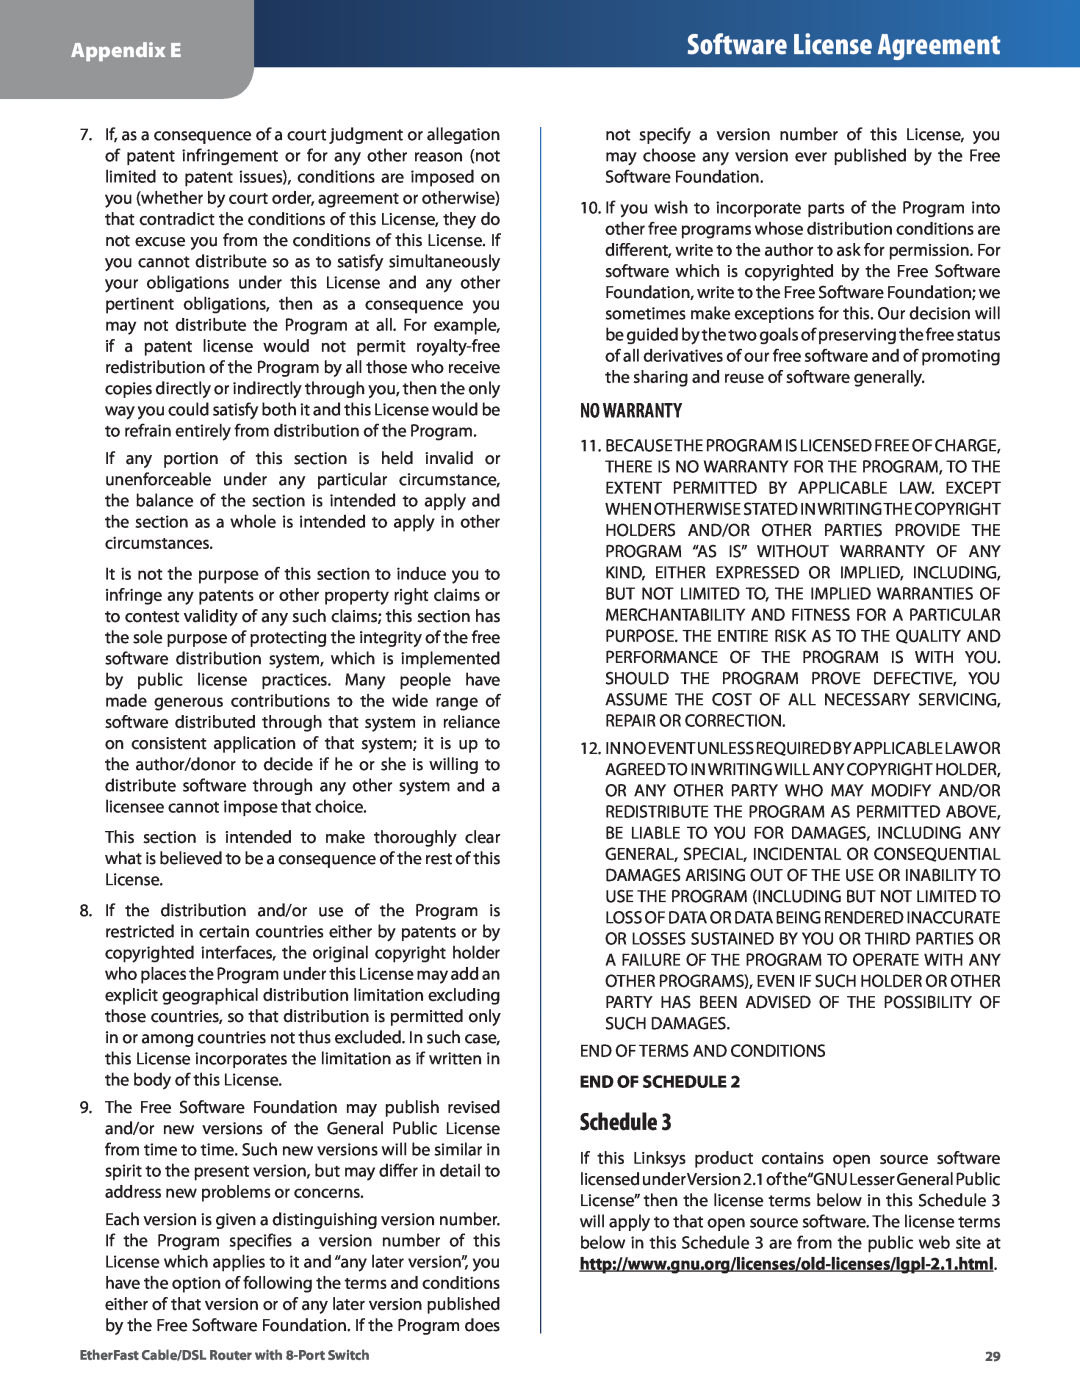 Cisco Systems BEFSR81 manual No Warranty, Software License Agreement, Schedule, Appendix E 